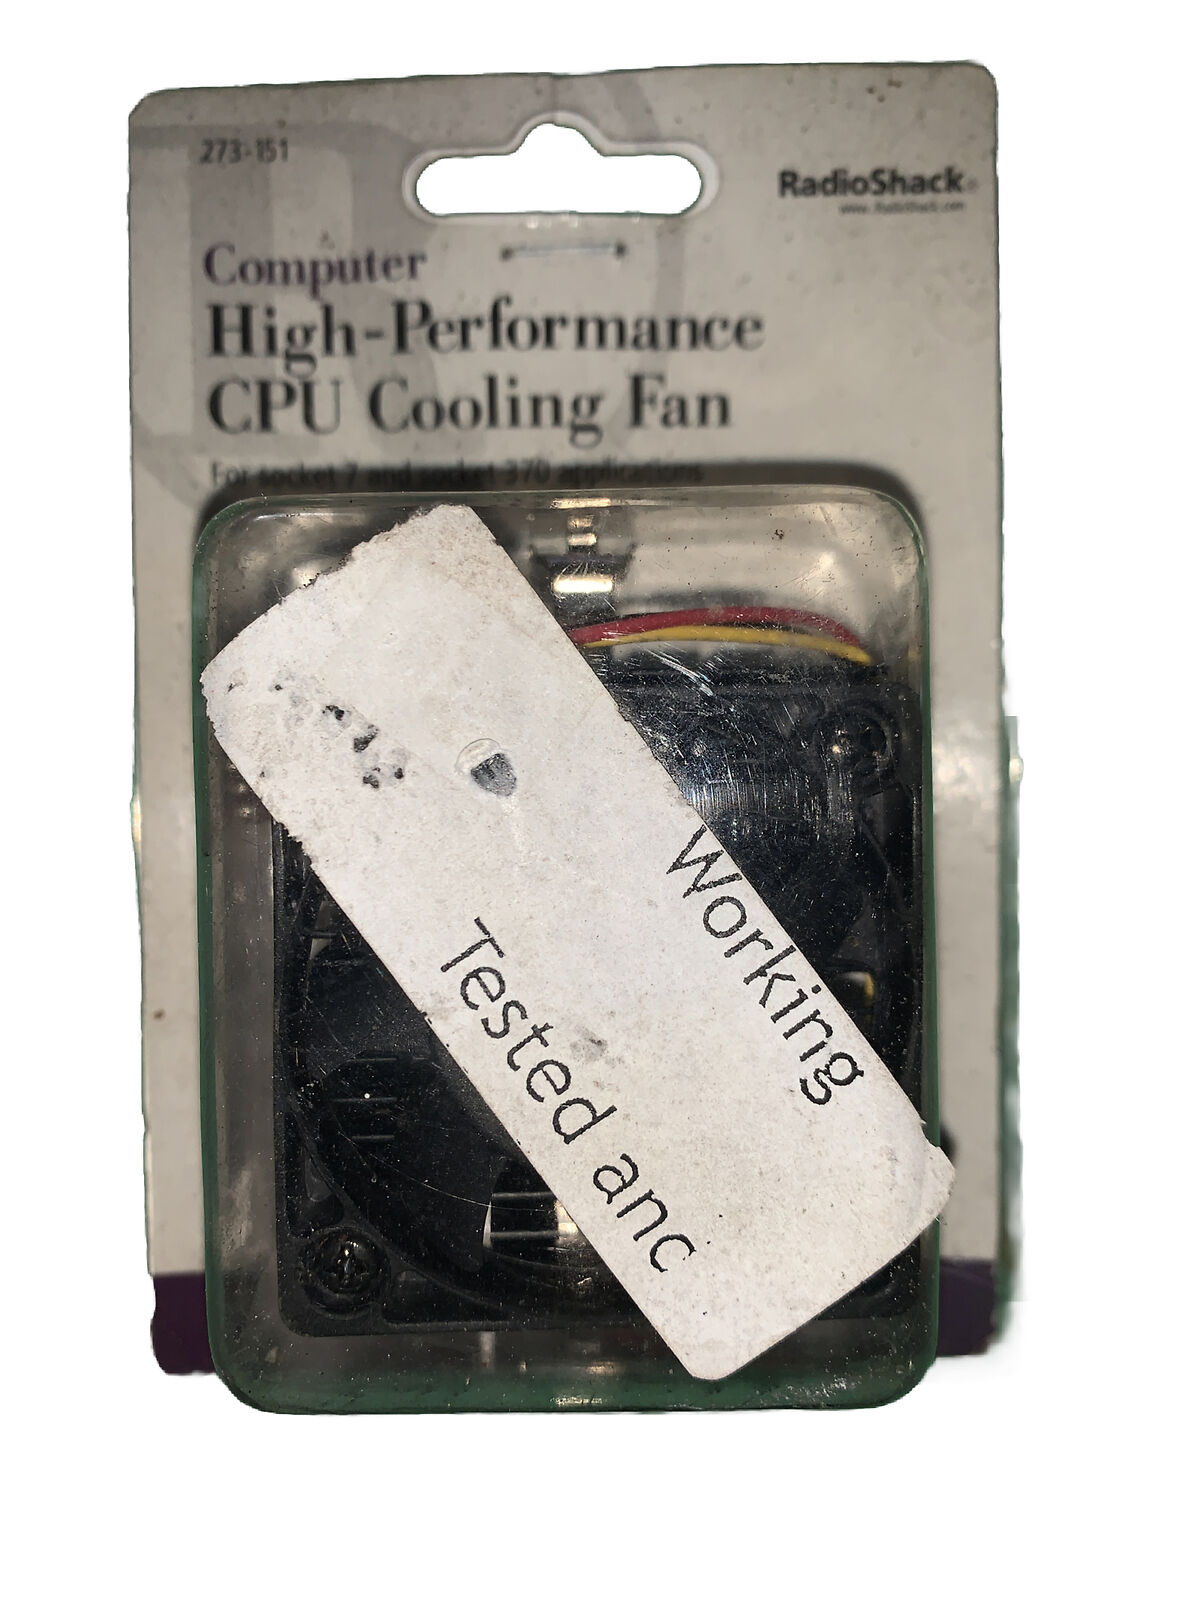 Genuine Radio Shack (273 151) Computer High-Performance CPU Cooling Fan